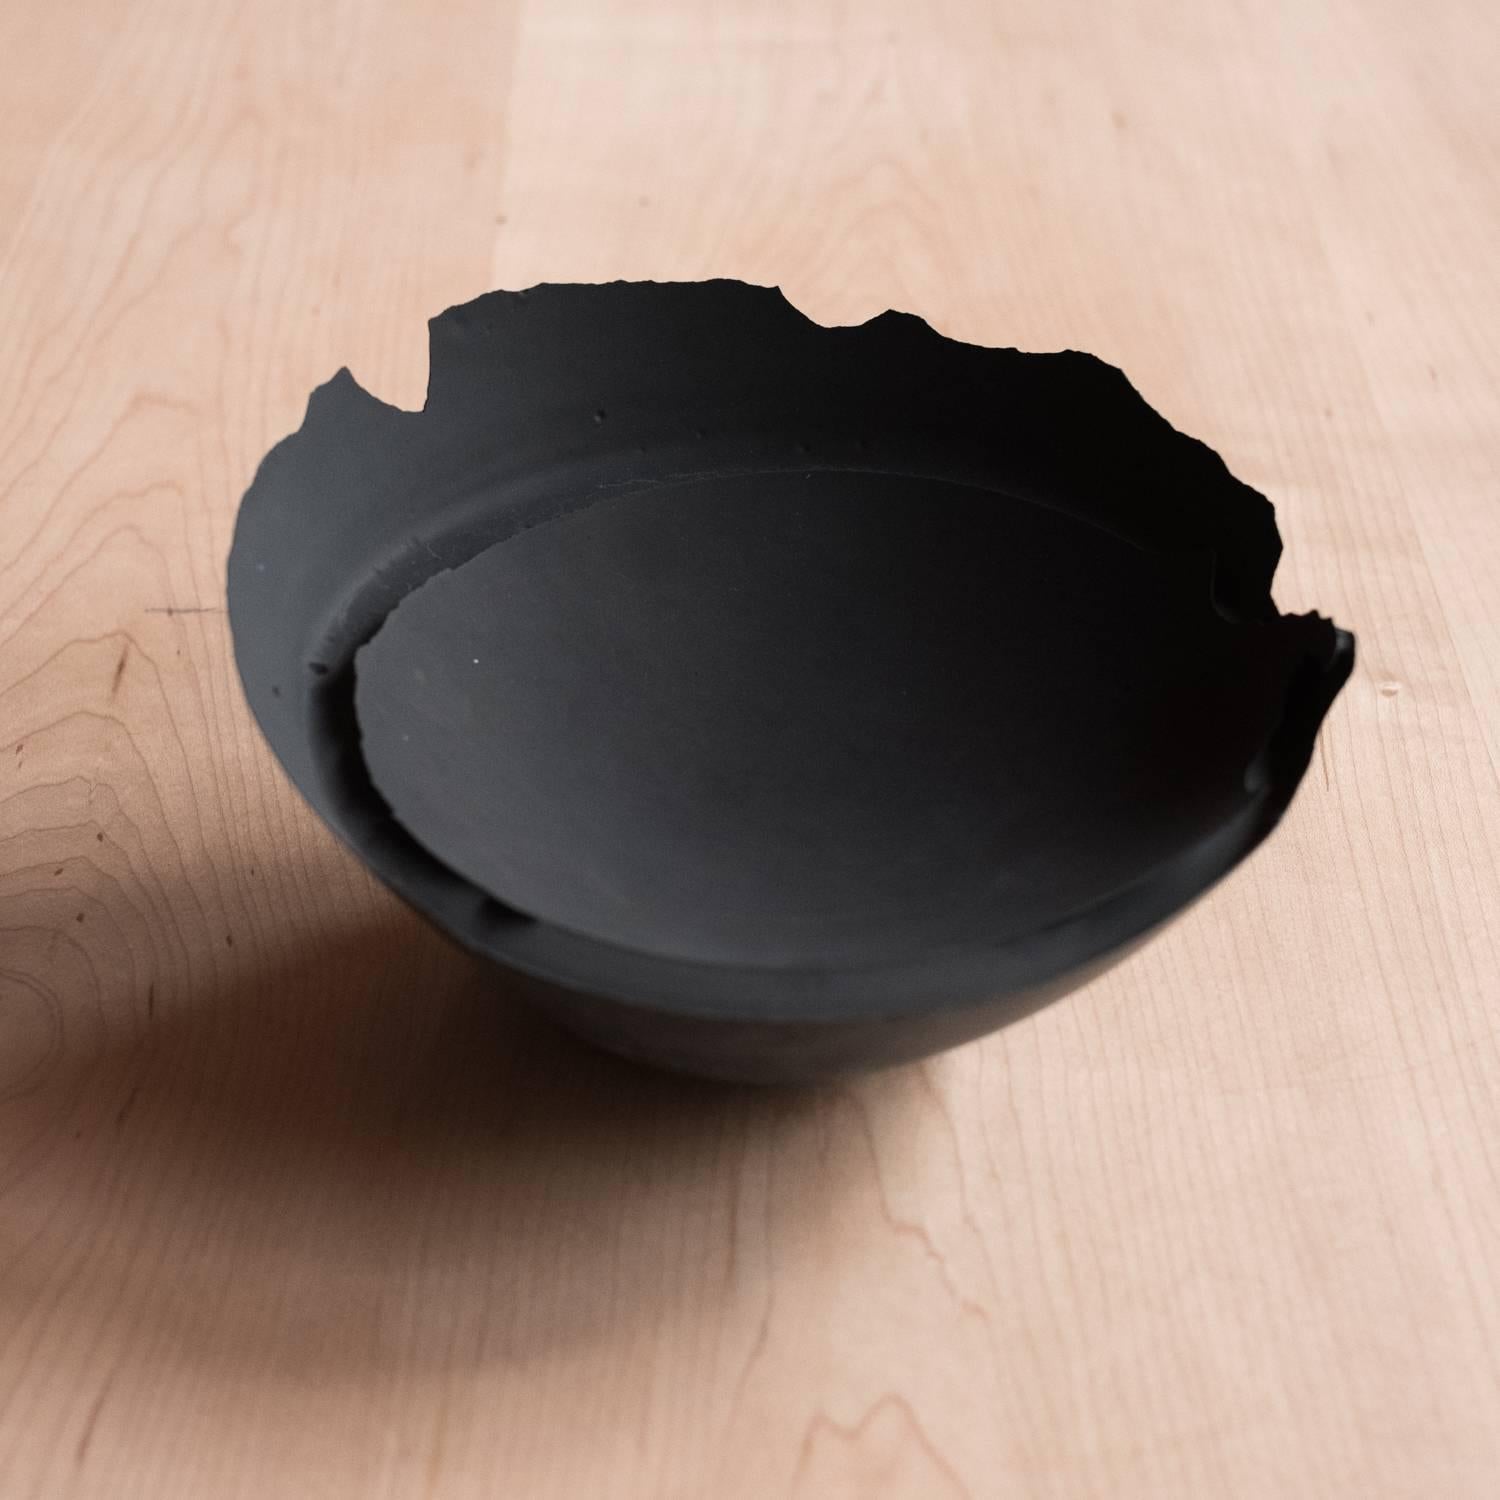 American Handmade Cast Concrete Bowl in Black by UMÉ Studio